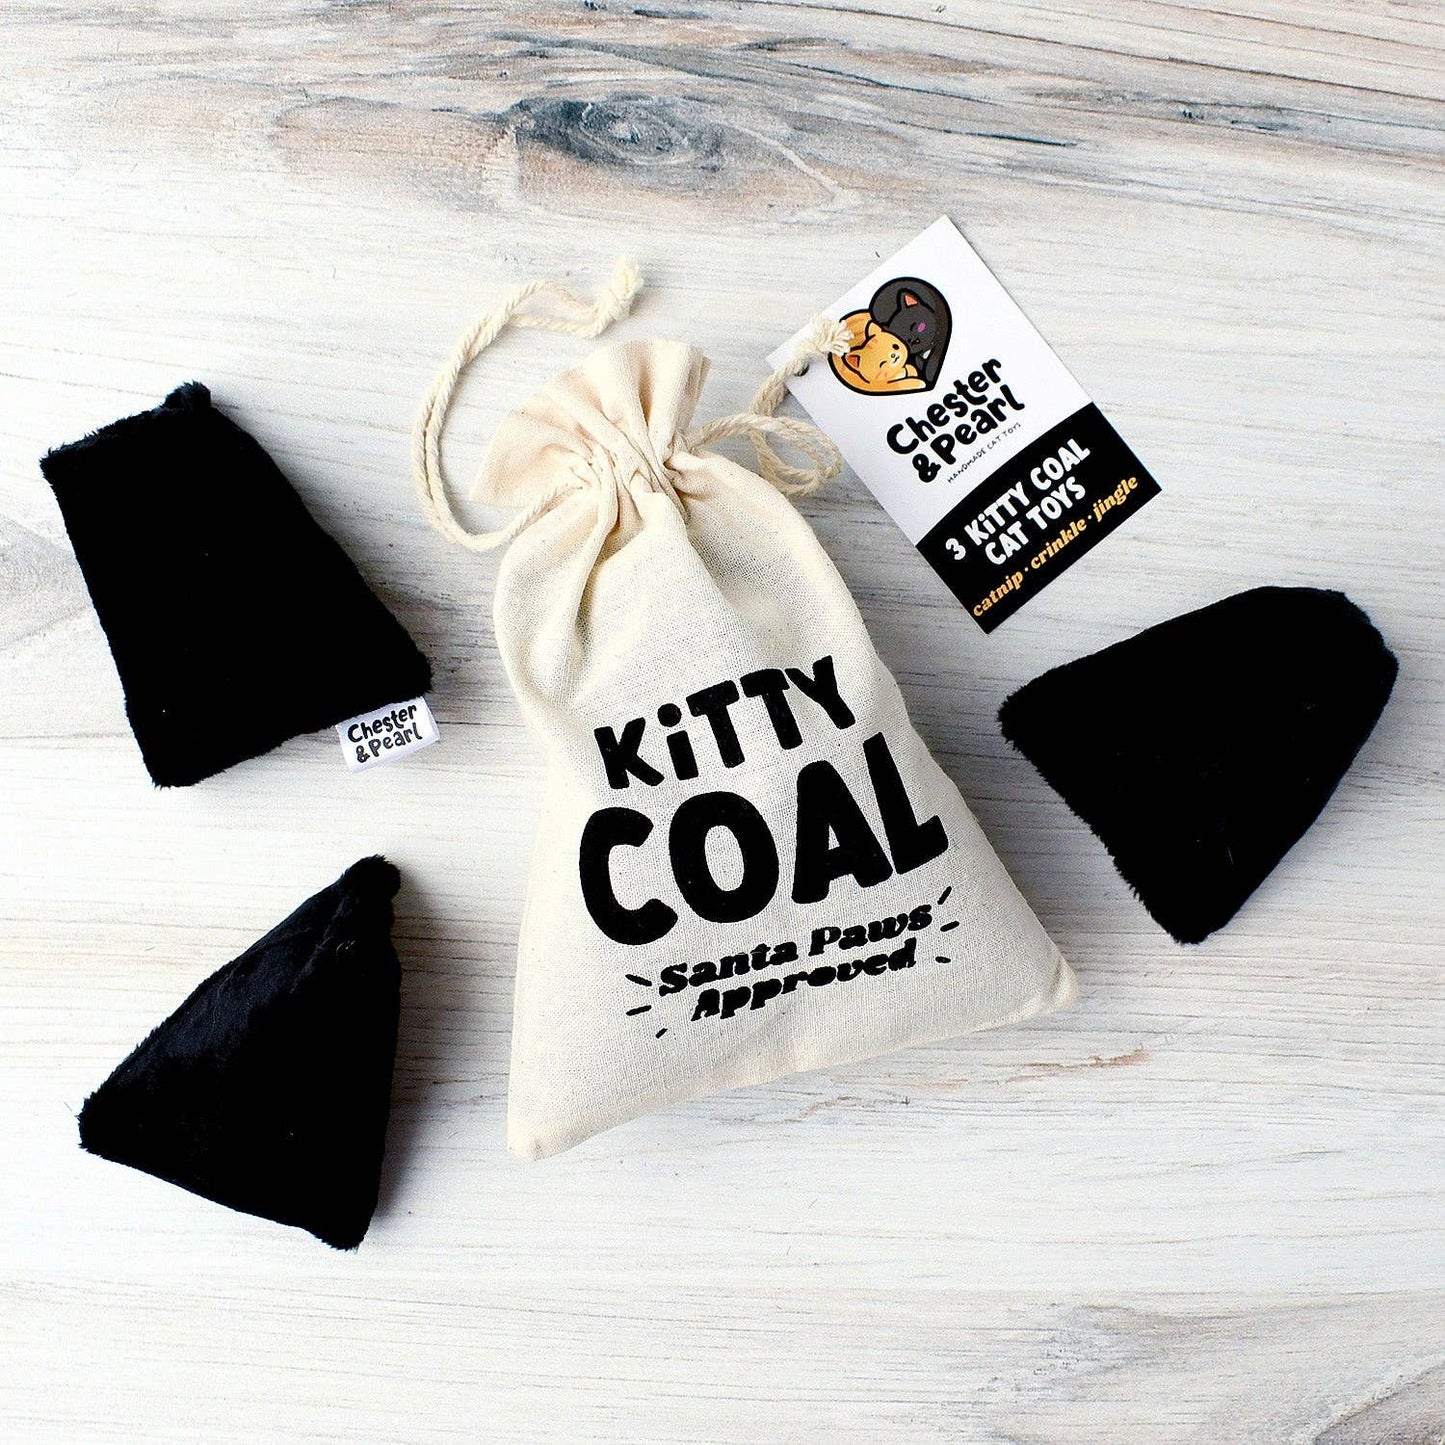 Kitty Coal Christmas Cat Toys